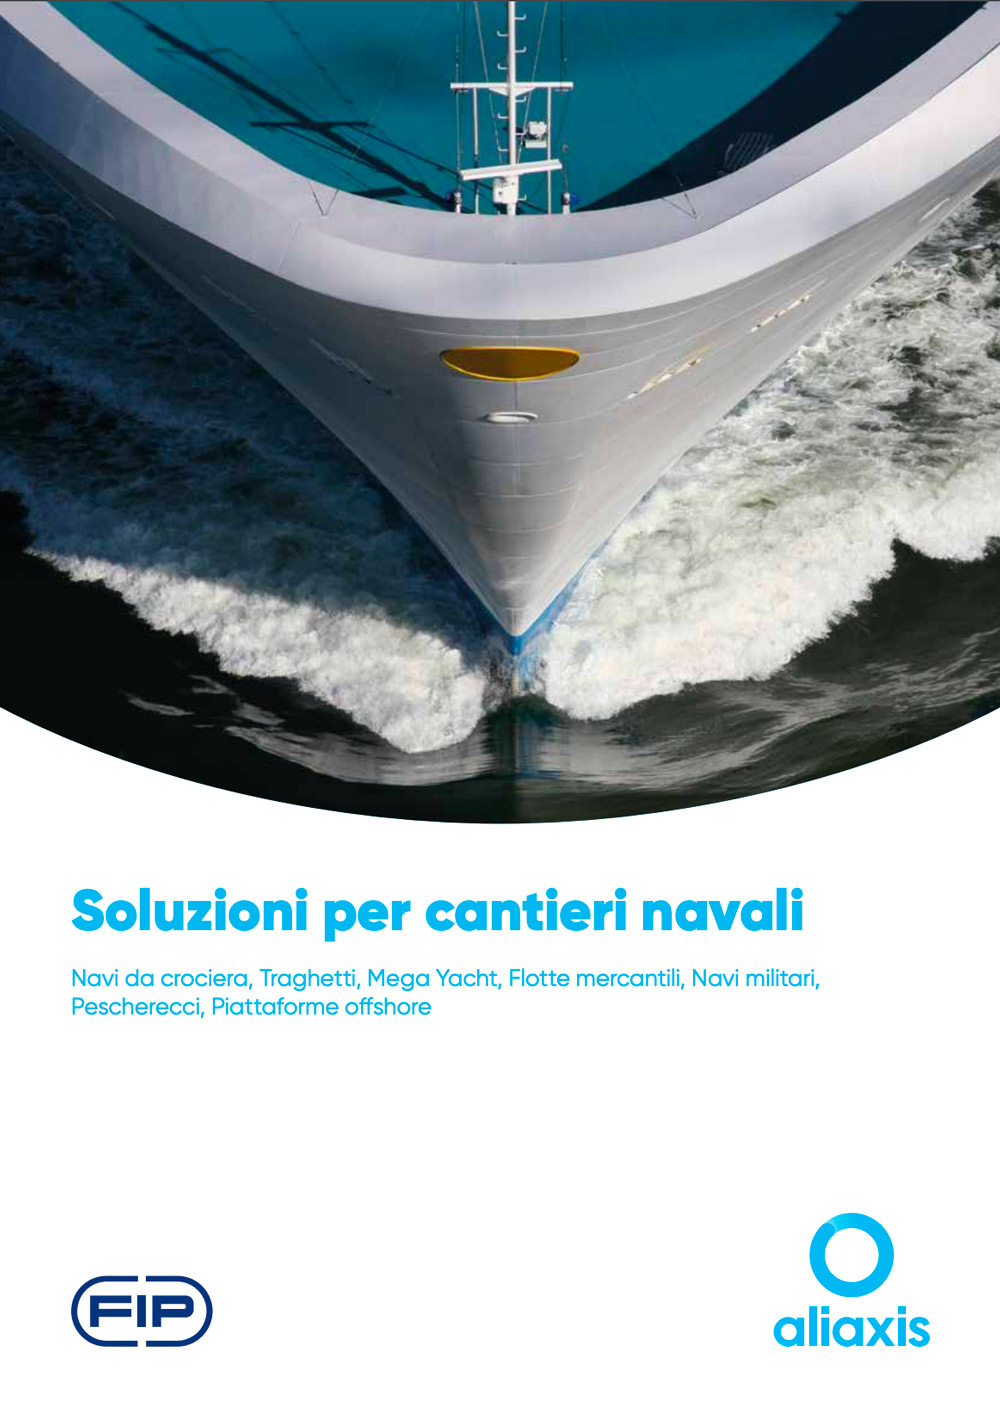 Brochure Marine Aliaxis Italy